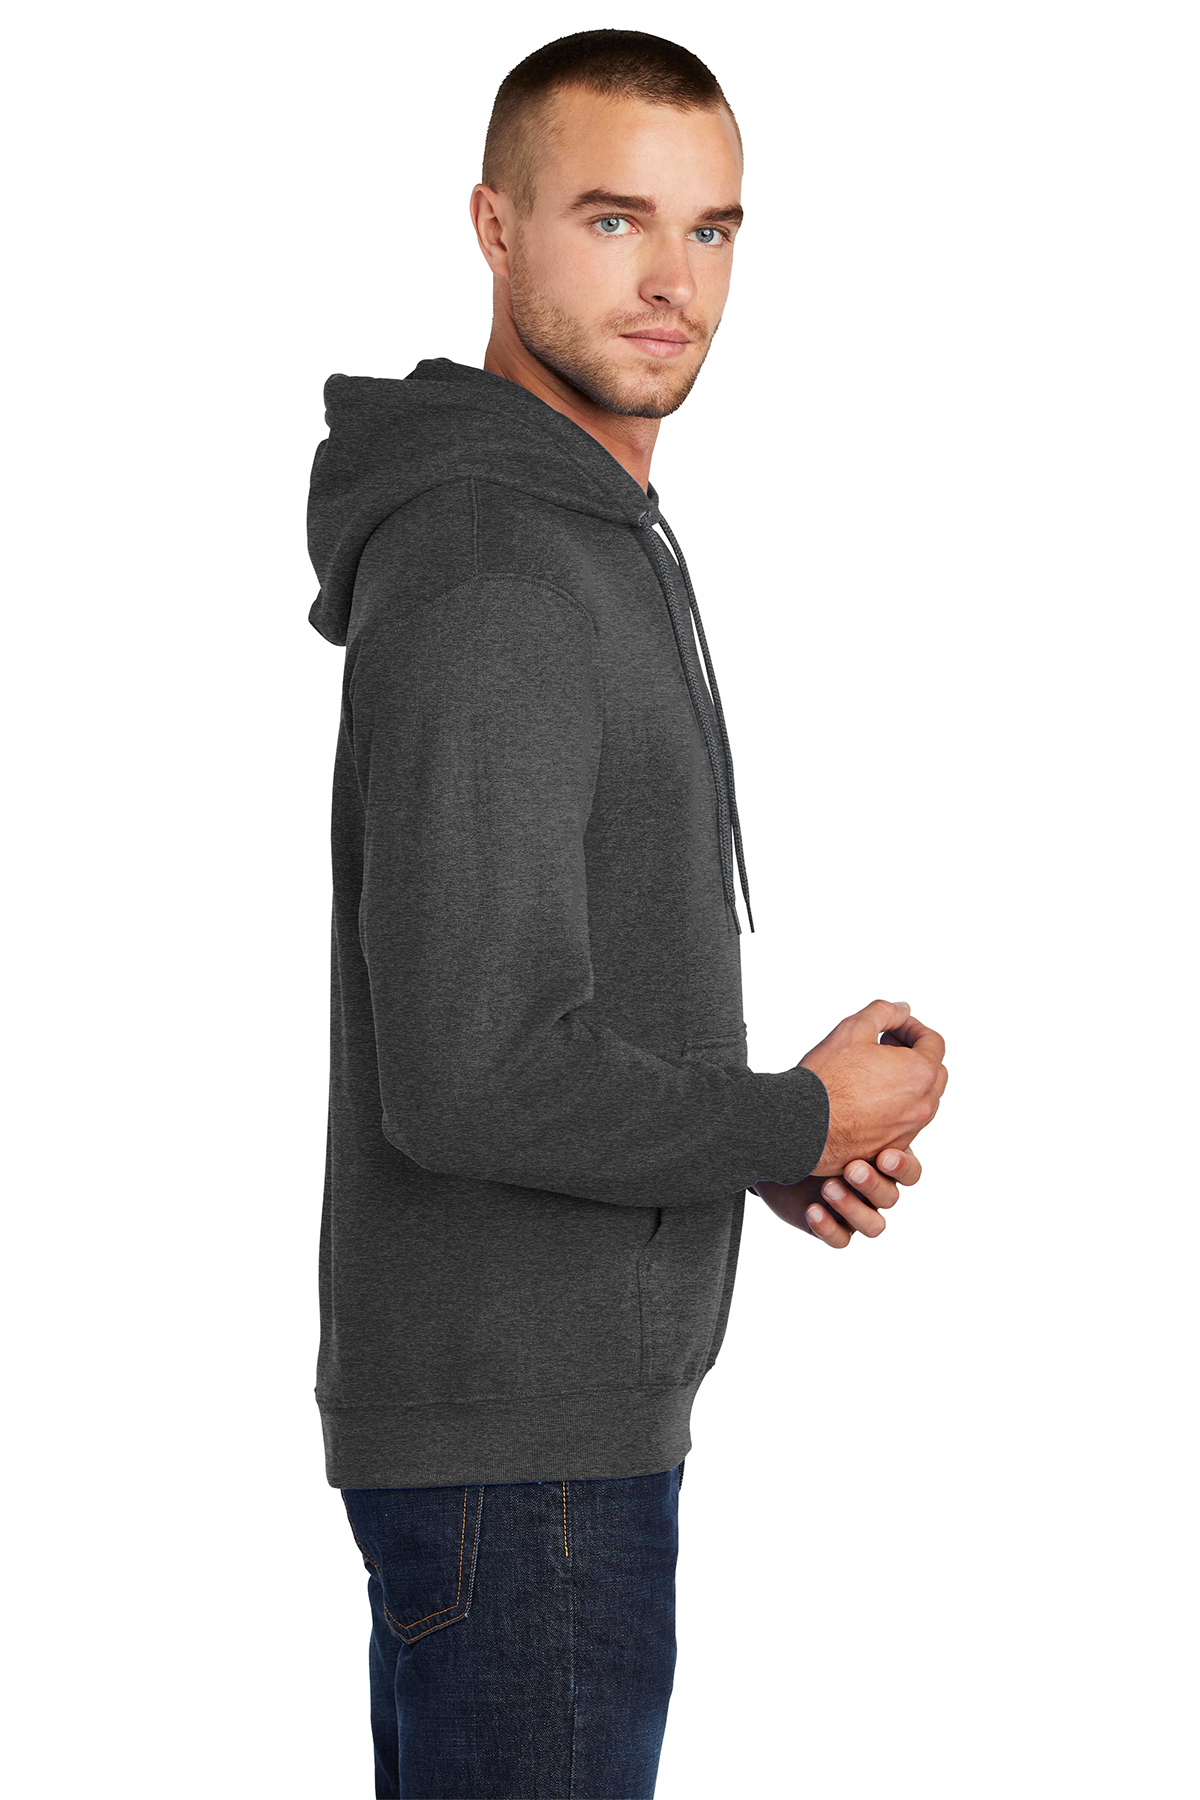 Port & Company Tall Core Fleece Pullover Hooded Sweatshirt | Product ...